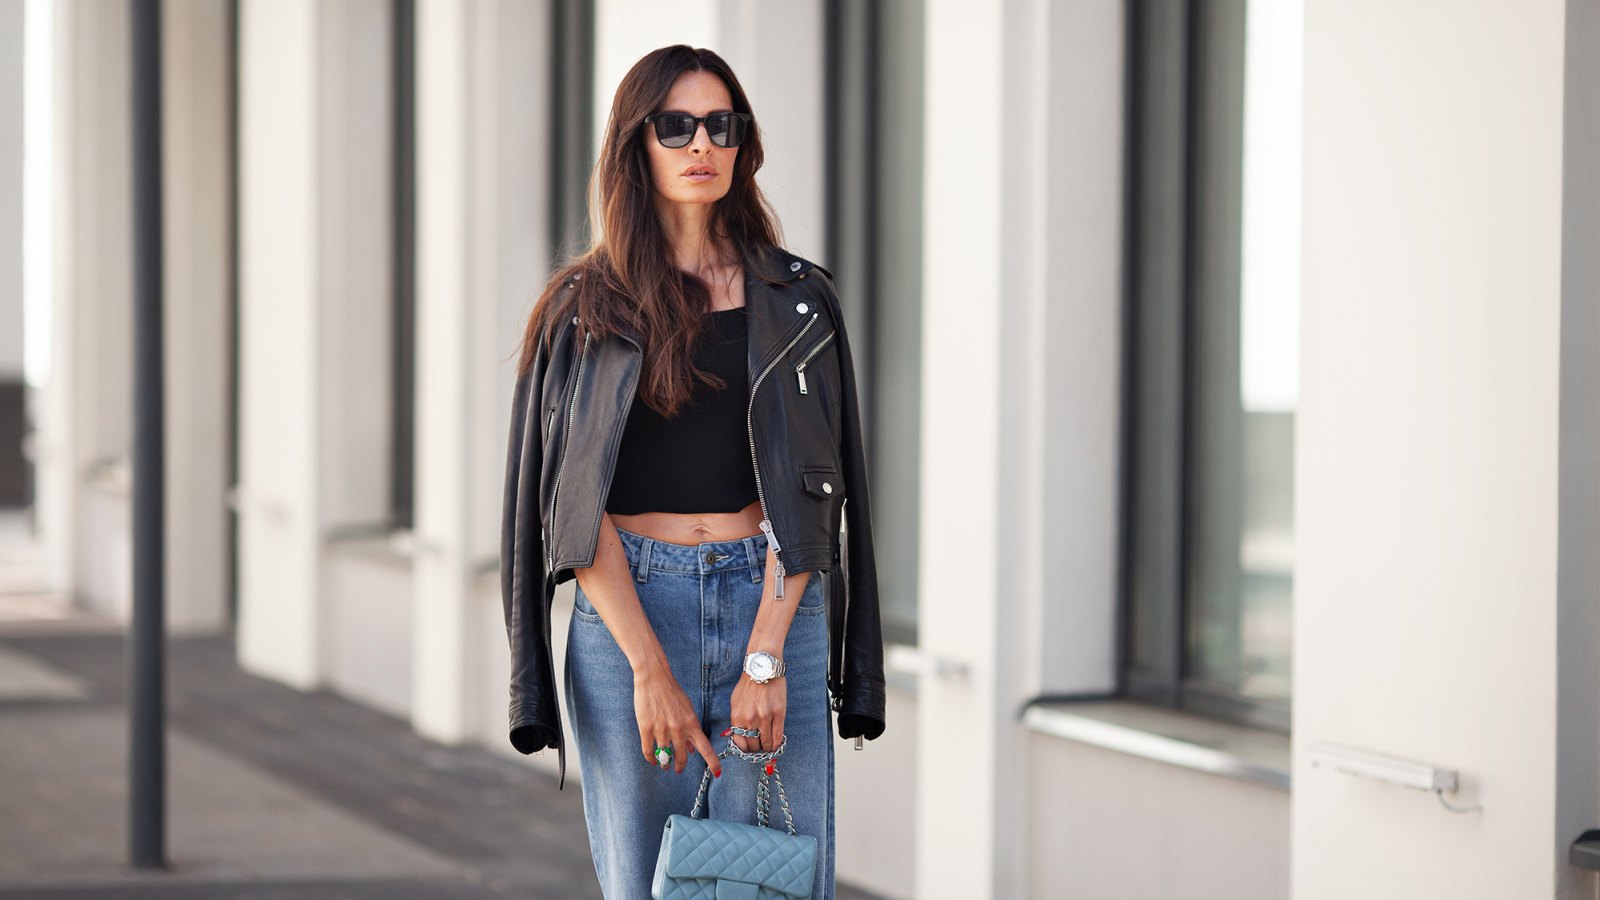 Portrait of gorgeous brunette woman standing city street. Fashion model wears black leather jacket, jeans, short top, small handbag on chain. Street style.